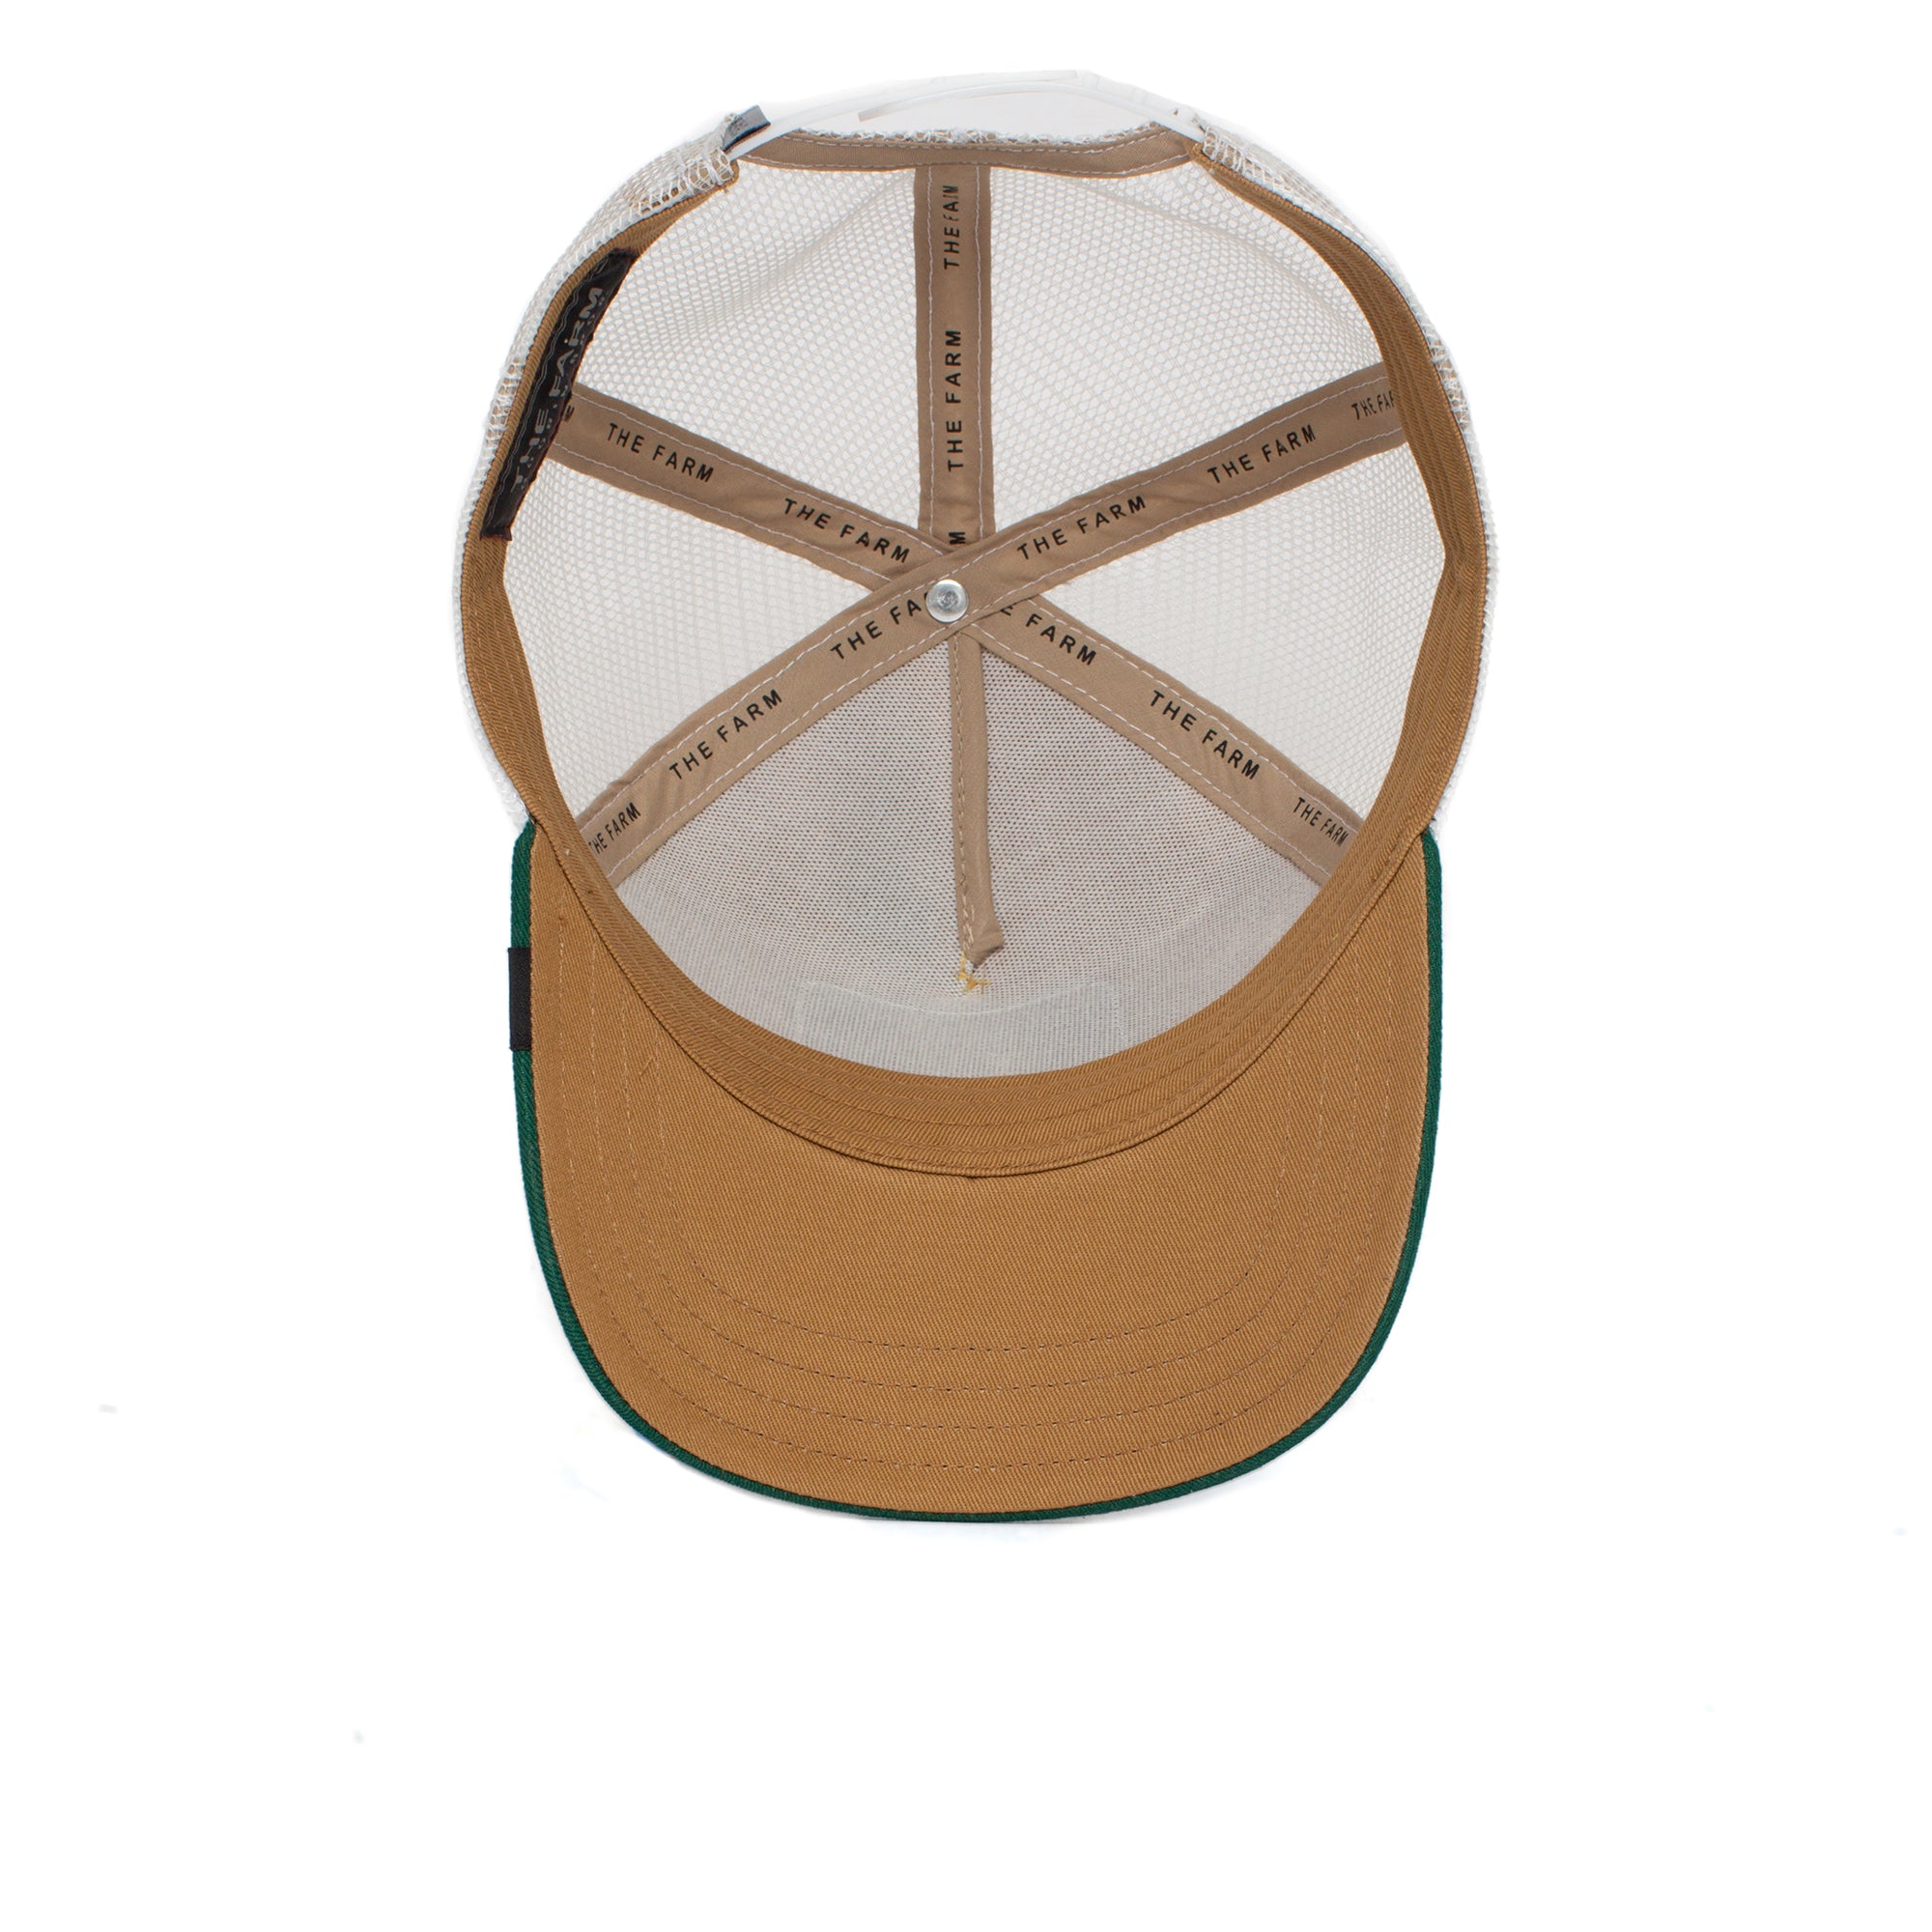 GALLO COCK CAMUFLAJE GOORIN BROS - Viking Caps